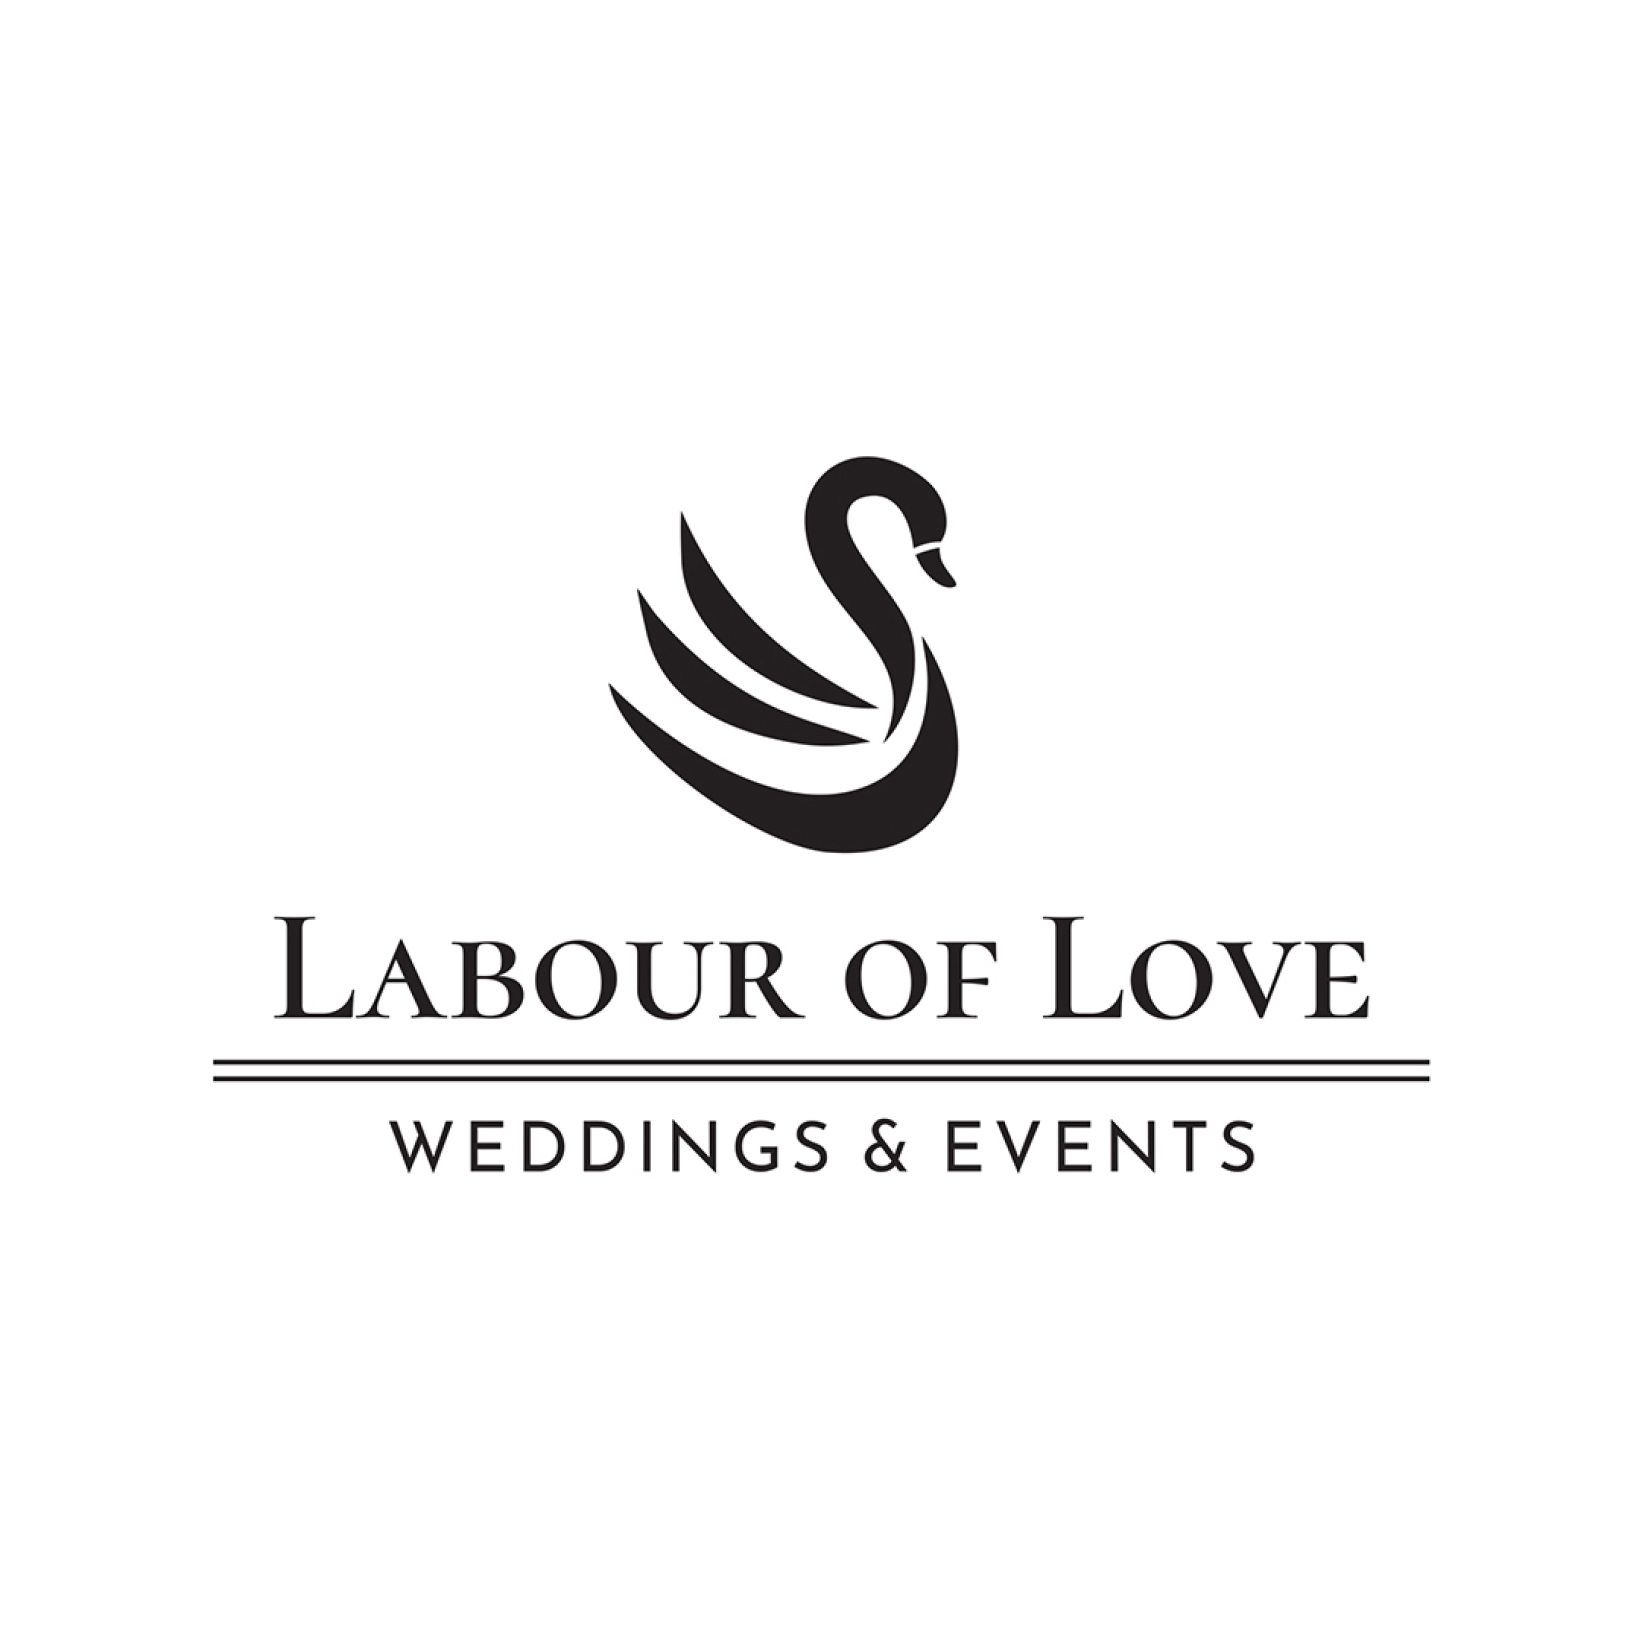 Labour of Love Weddings and Events Οργάνωση Γάμου Βάπτισης Στολισμός Γάμου Wedding Planning Services Θεσσαλονίκη Αλ. Σβώλου 1 Θεσσαλονίκη 546 22